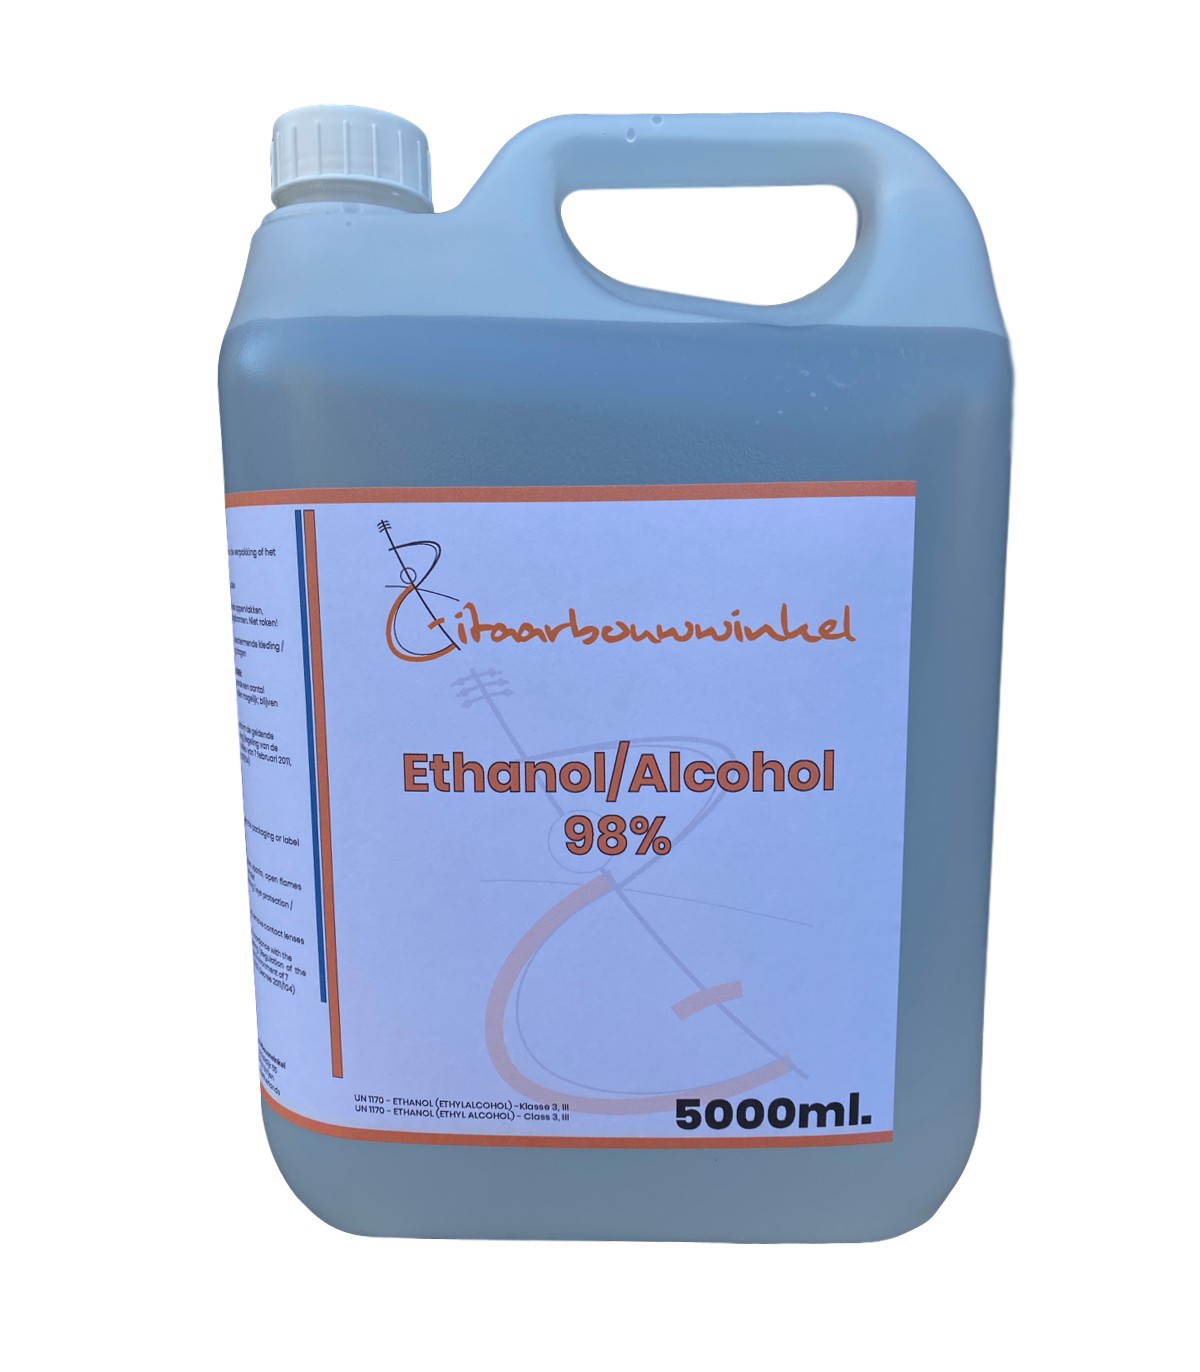 Ethanol - alcohol 98%